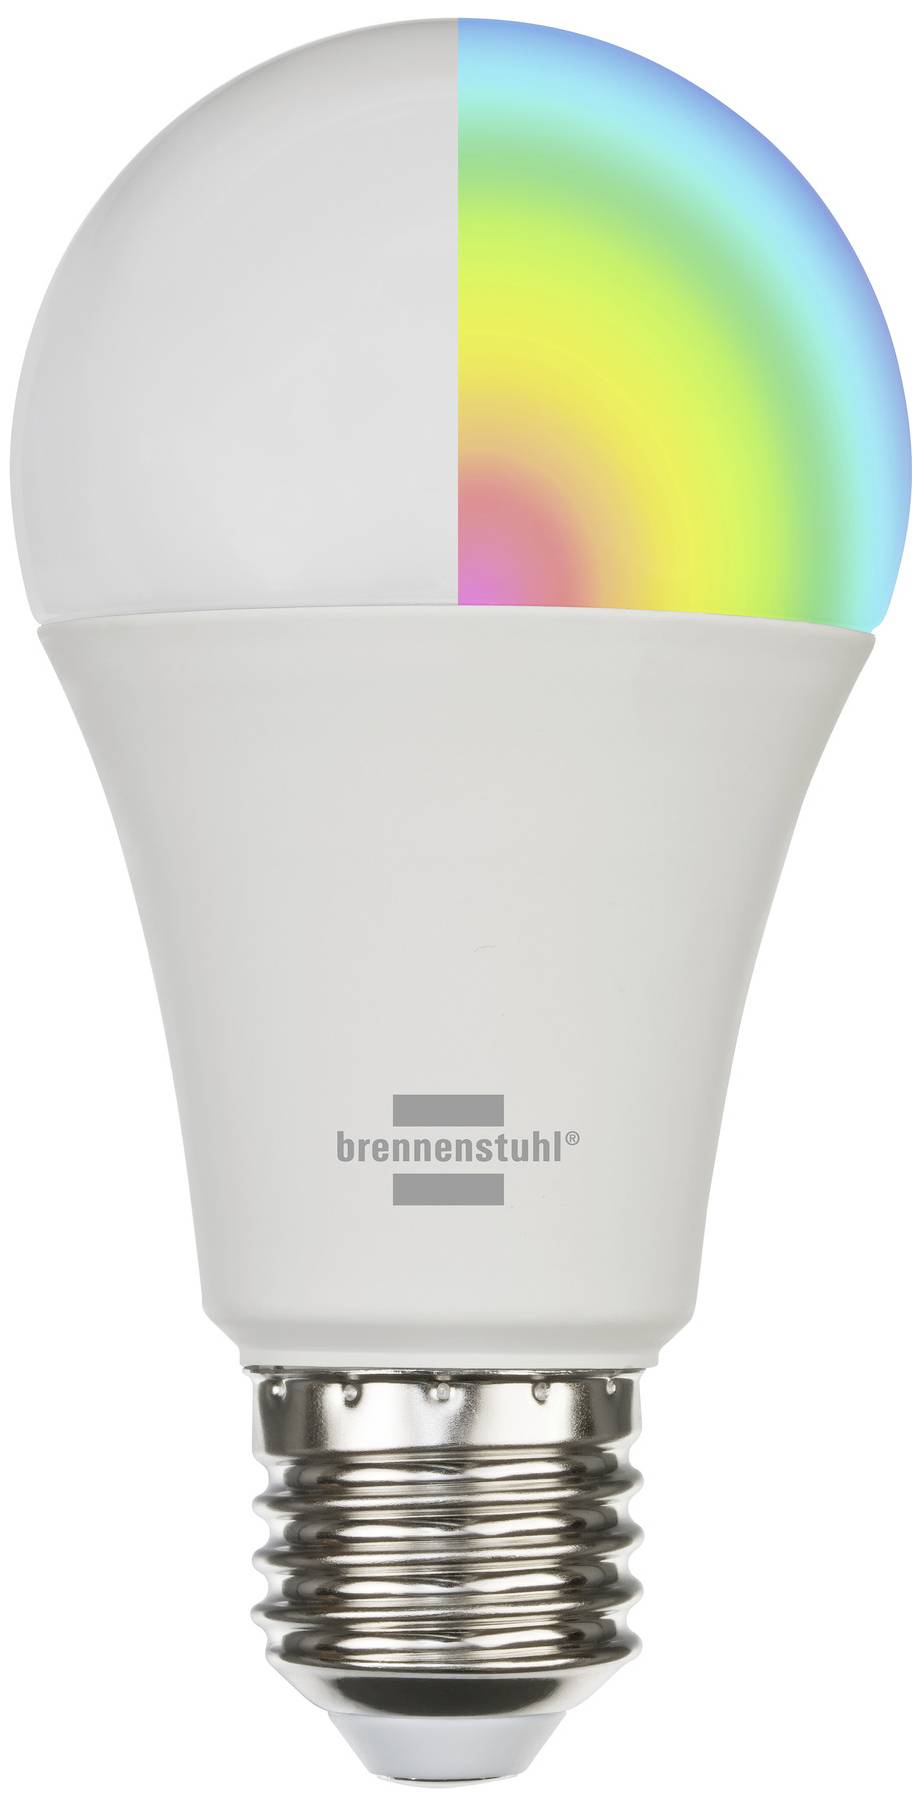 BRENNENSTUHL LED-Leuchtmittel EEK: A+ (A++ - E) Smart Connect E27 Kaltweiß, Warmweiß, RGB